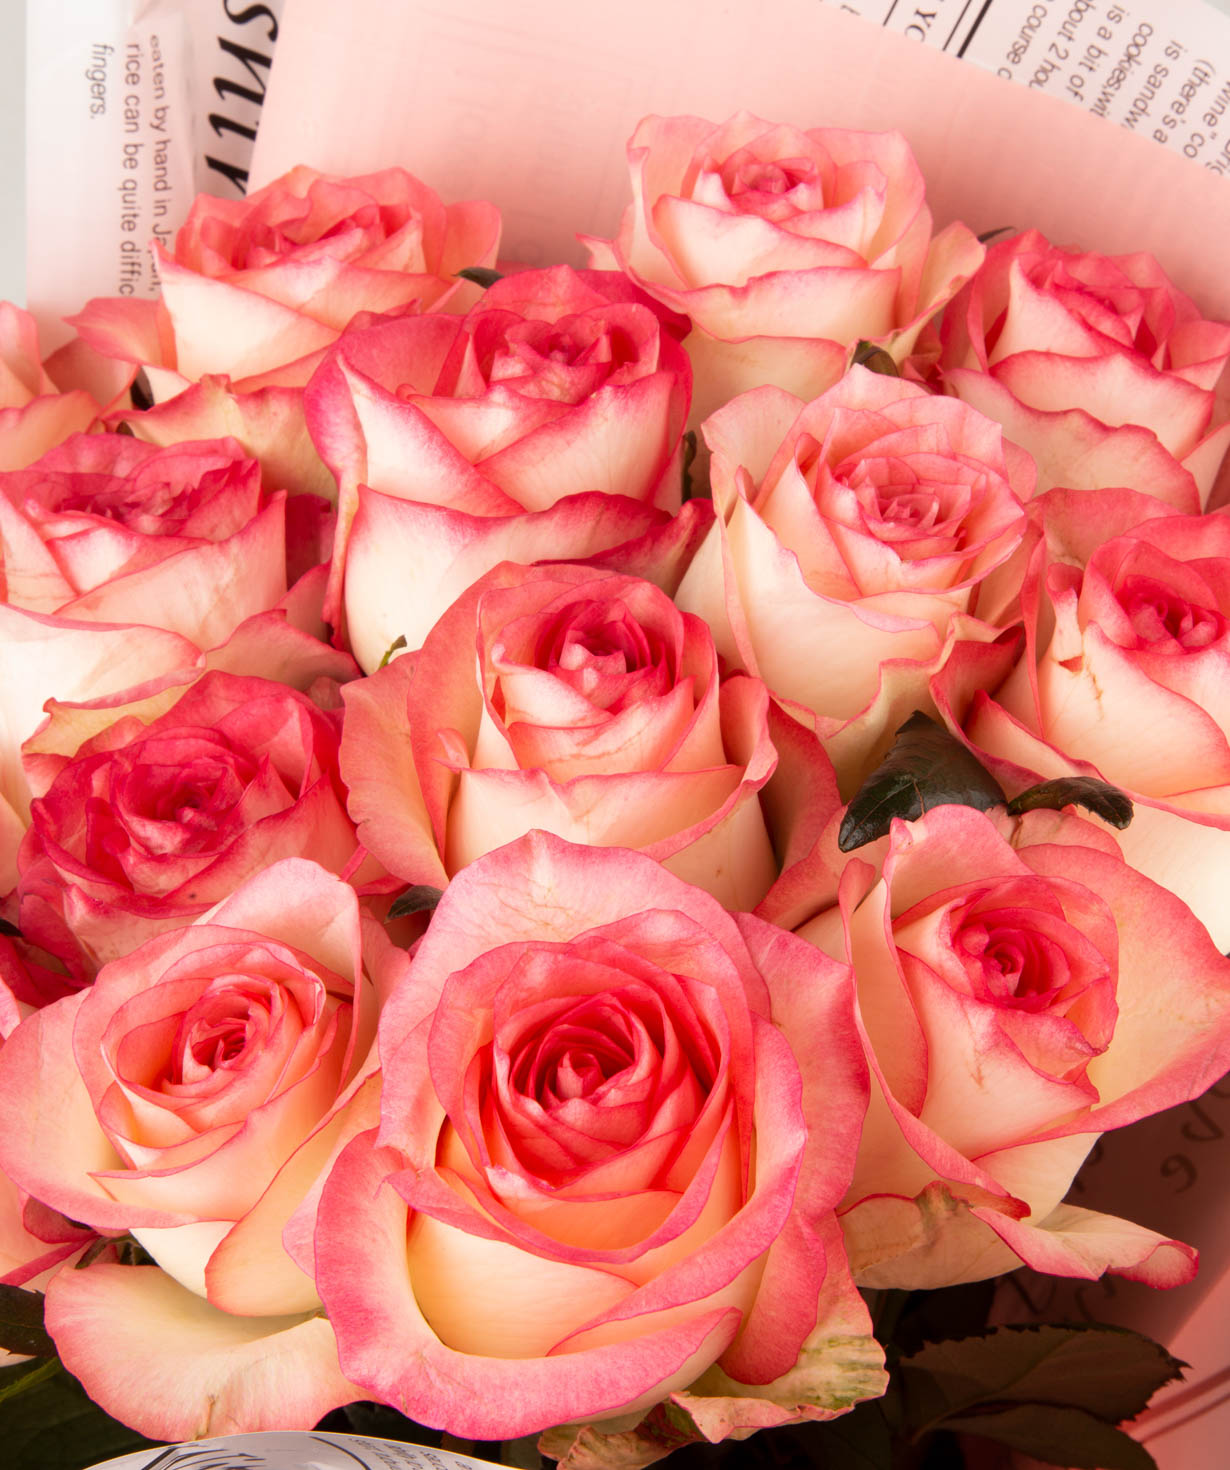 Bouquet `Lardero` with roses